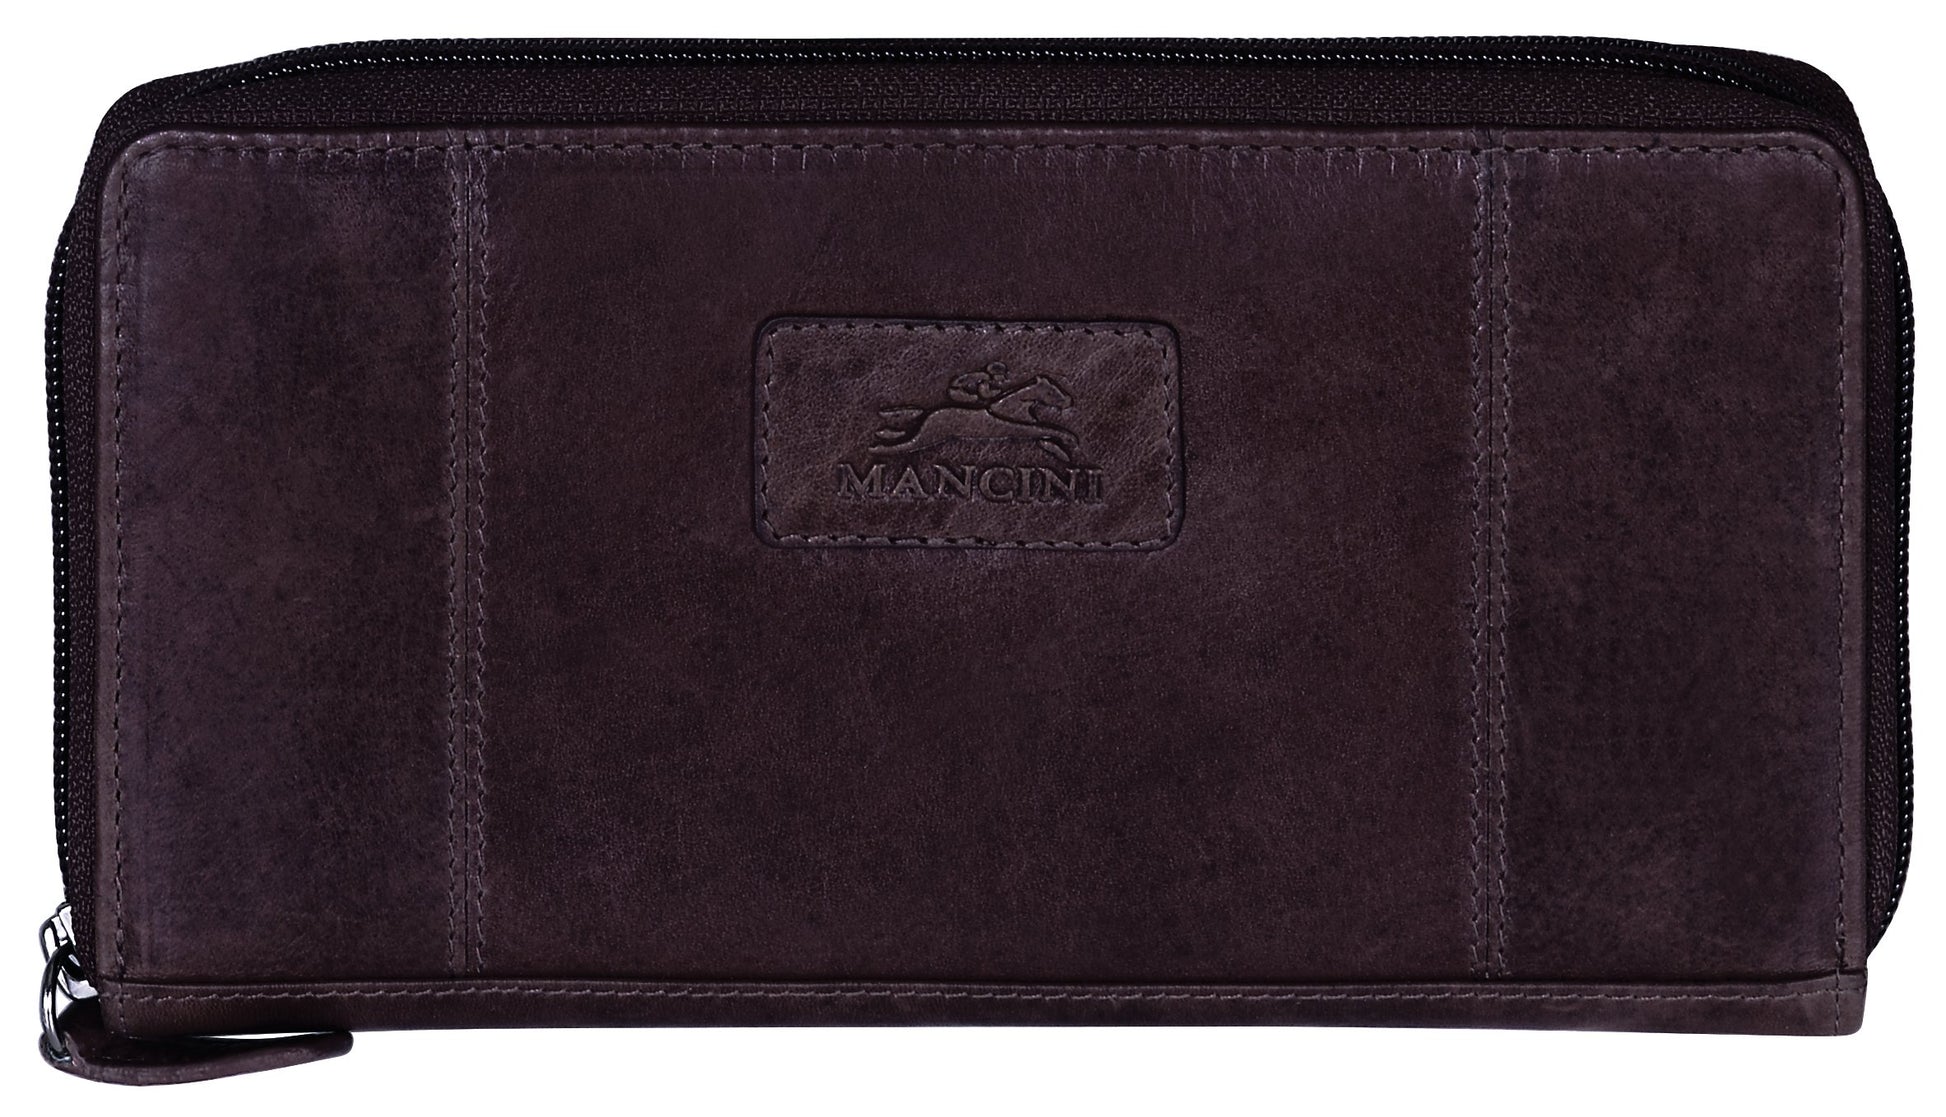 Mancini CASABLANCA Collection Ladies’ “Clutch” Wallet (RFID Secure) - Brown